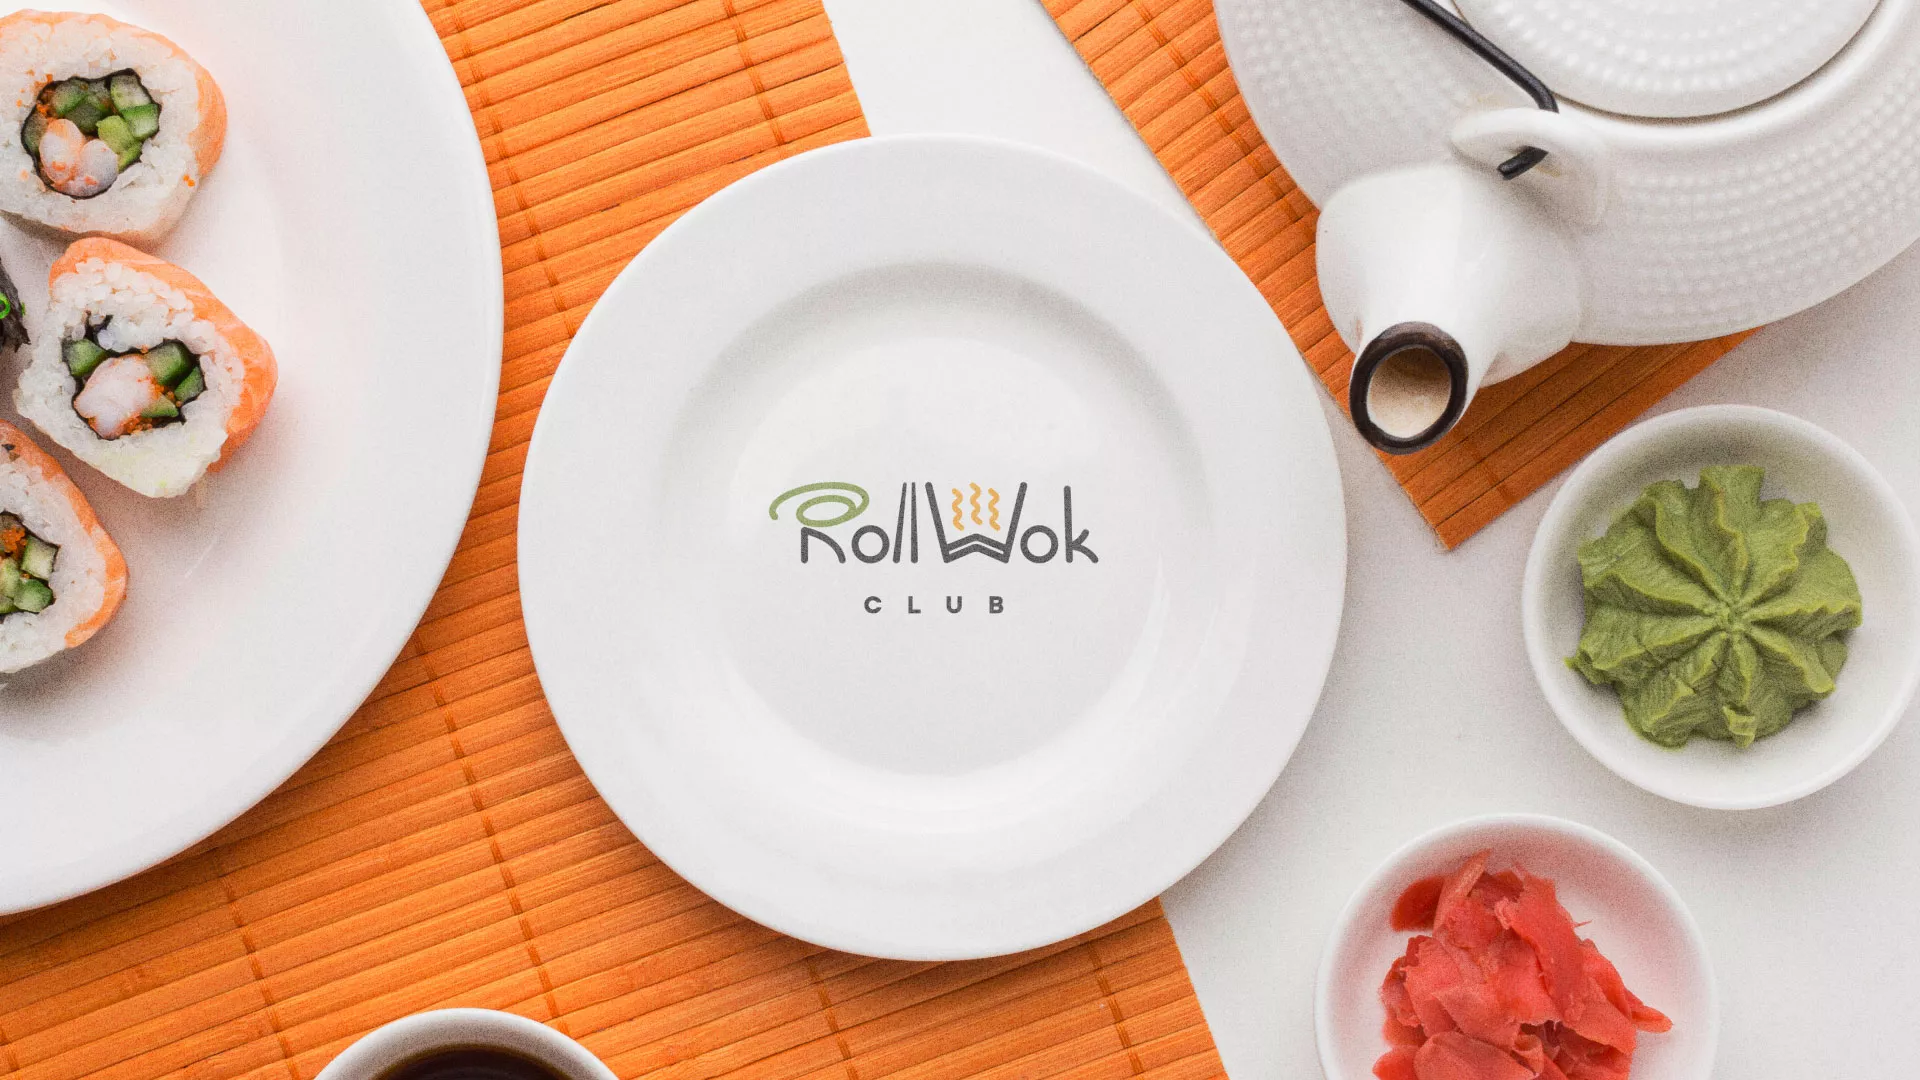 Разработка логотипа и фирменного стиля суши-бара «Roll Wok Club» в Новокузнецке